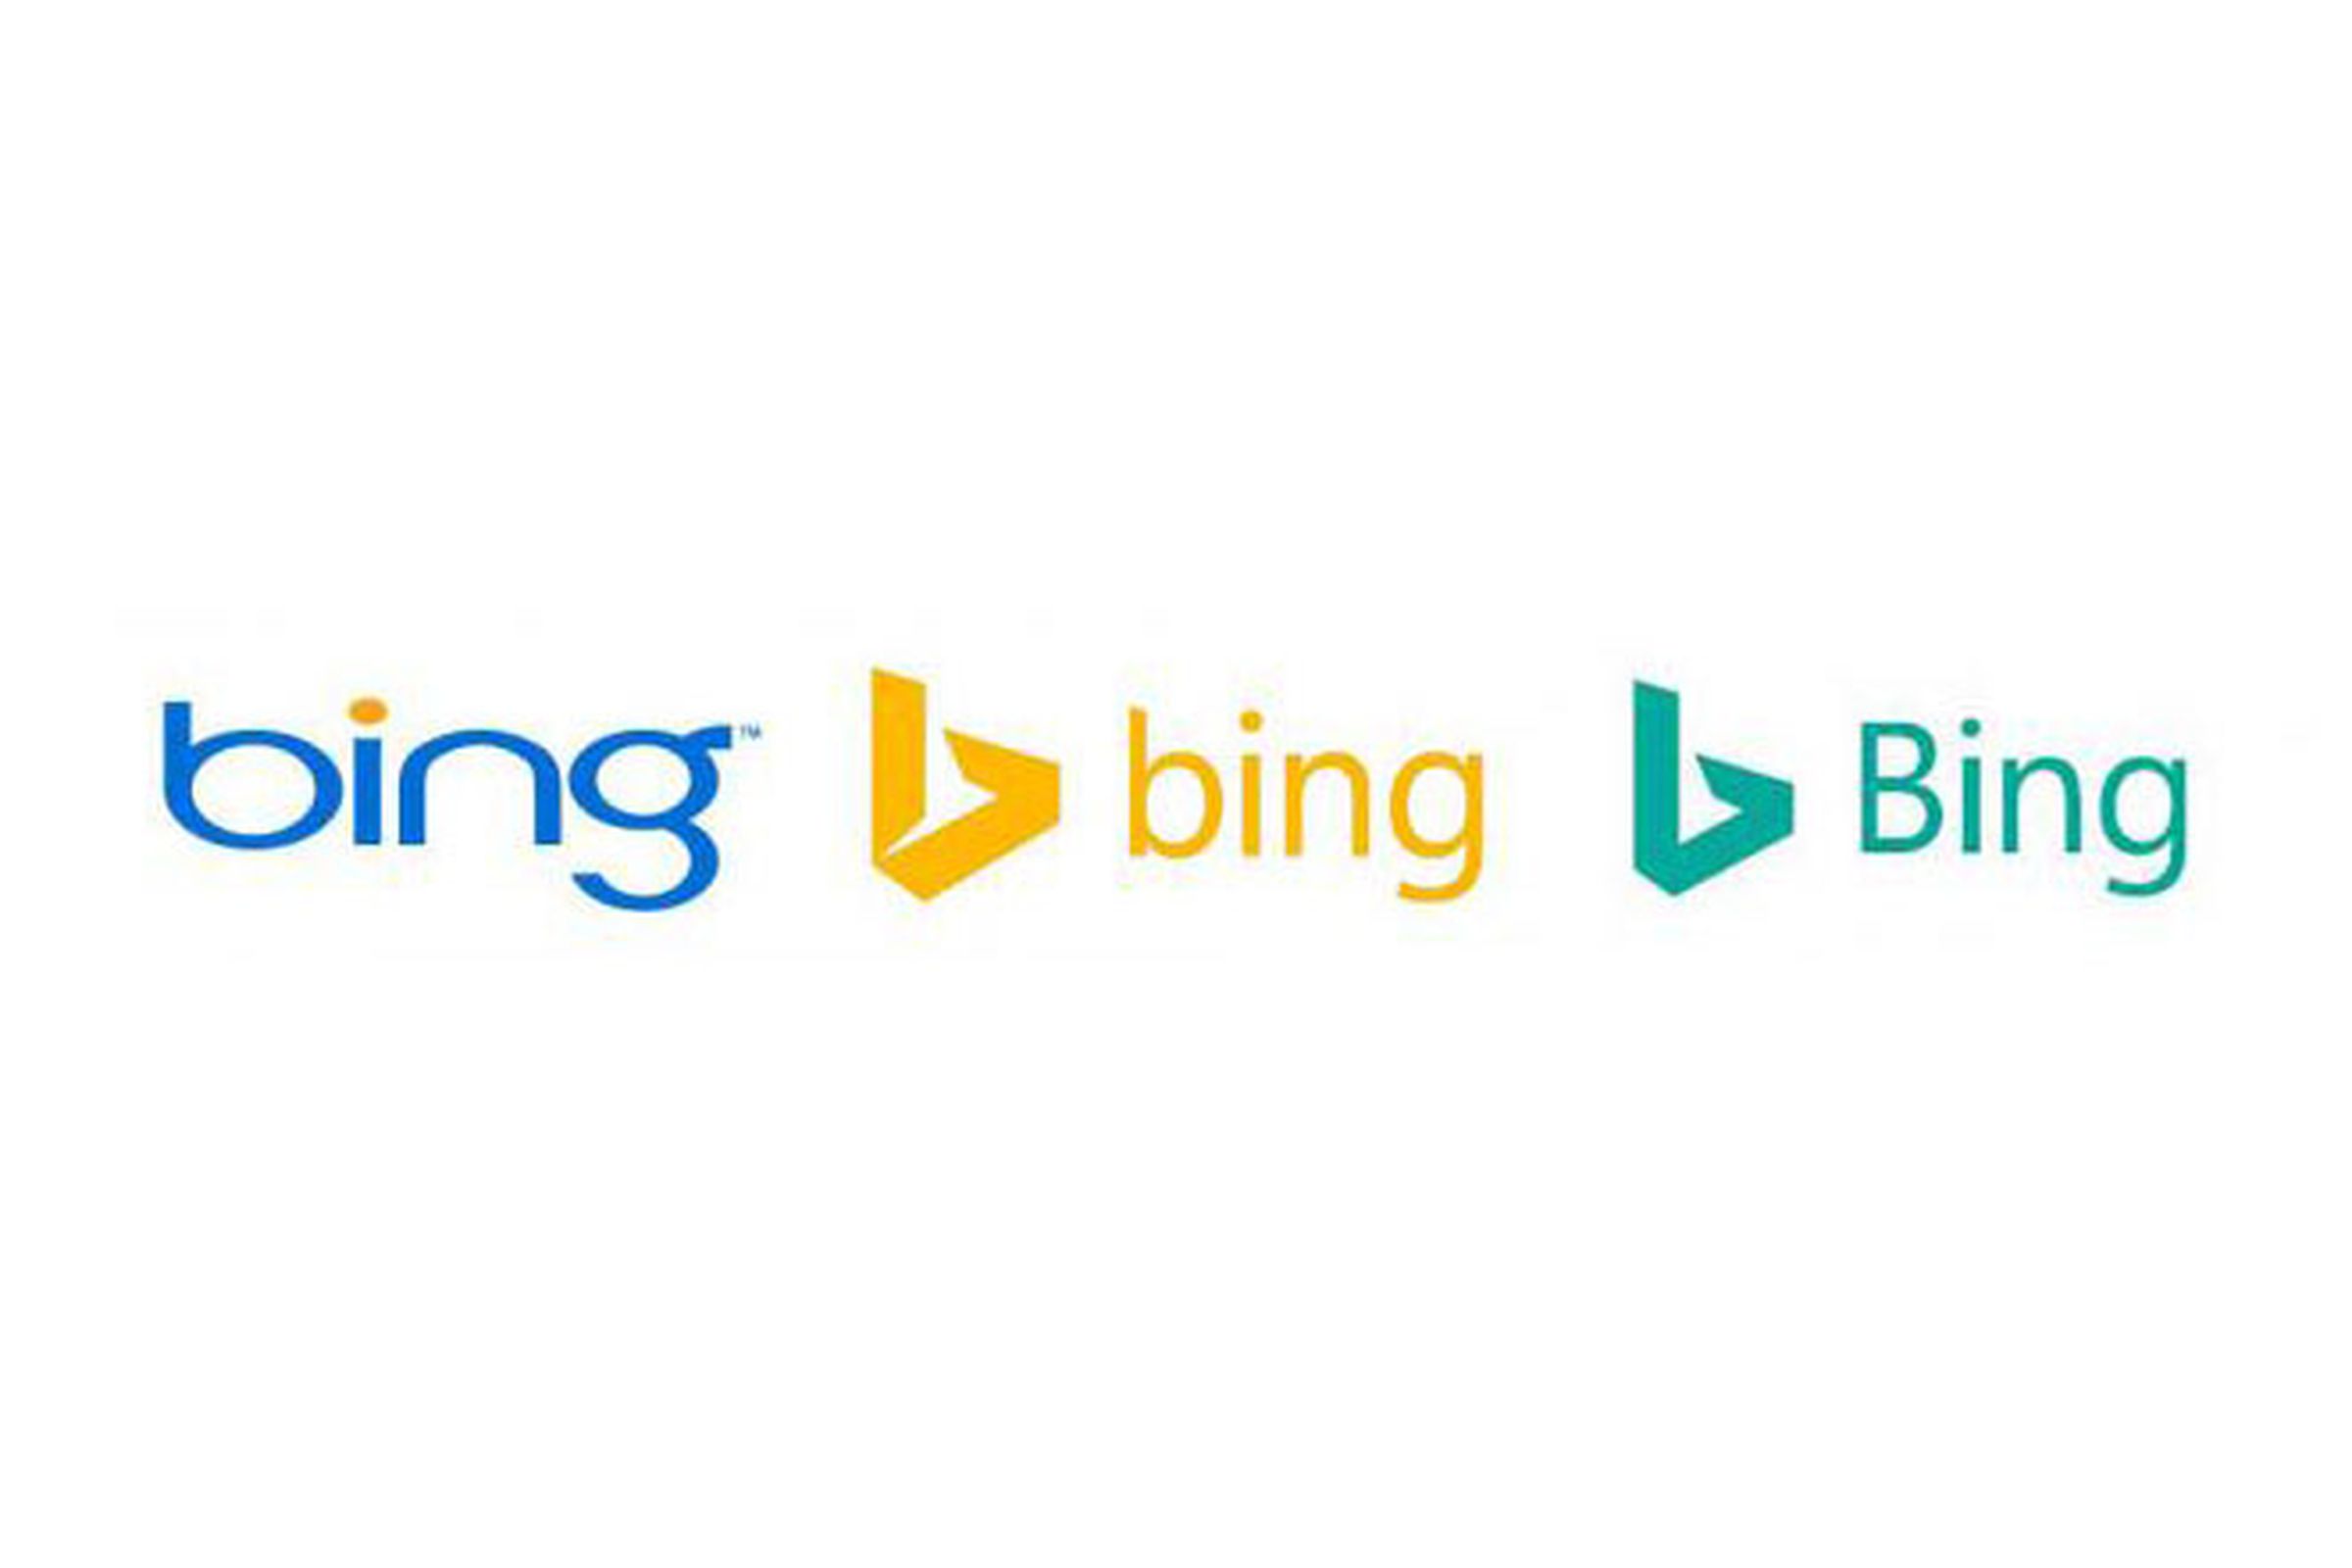 Bing api. Bing Поисковая система. Логотип поисковой системы бинг. Binn. Microsoft Bing логотип.